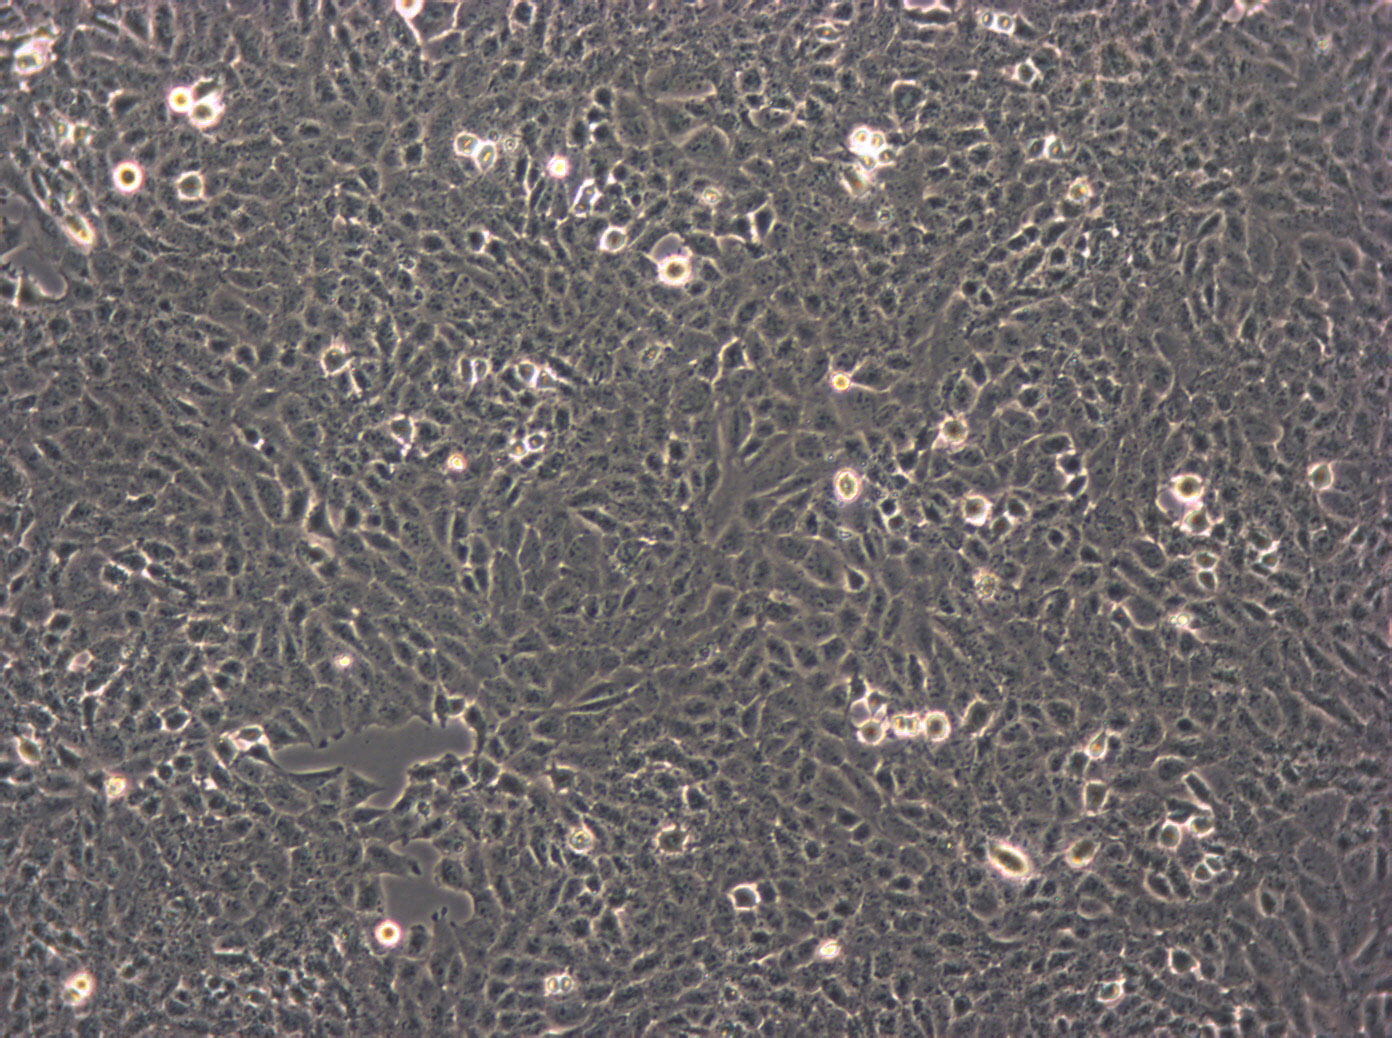 HSAEC1-KT cell line人肺小气道上皮细胞系,HSAEC1-KT cell line